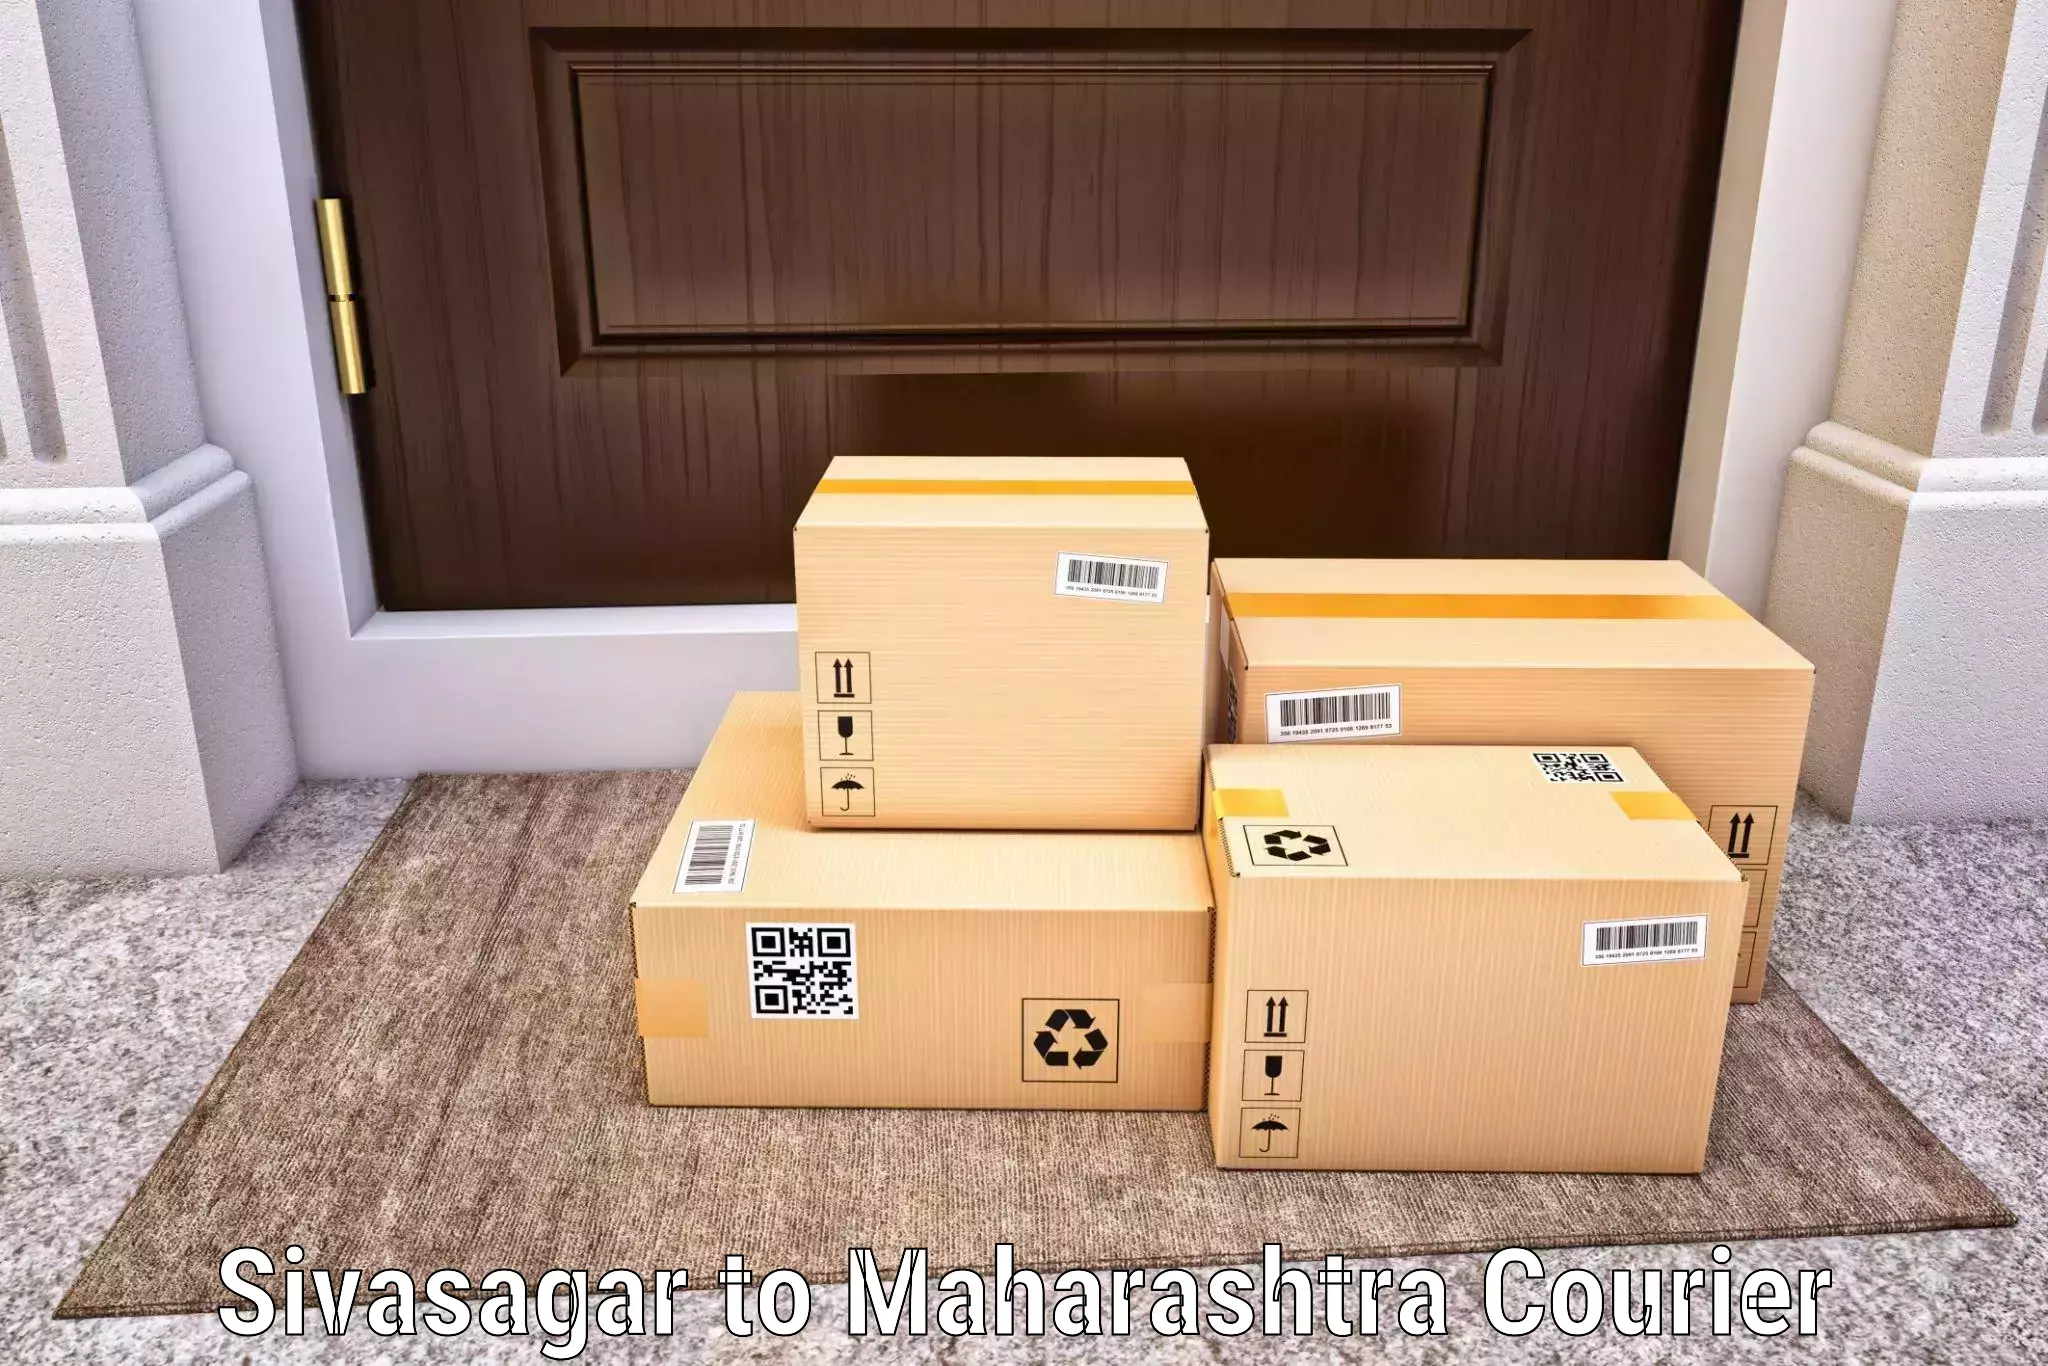 Courier membership Sivasagar to Wardha